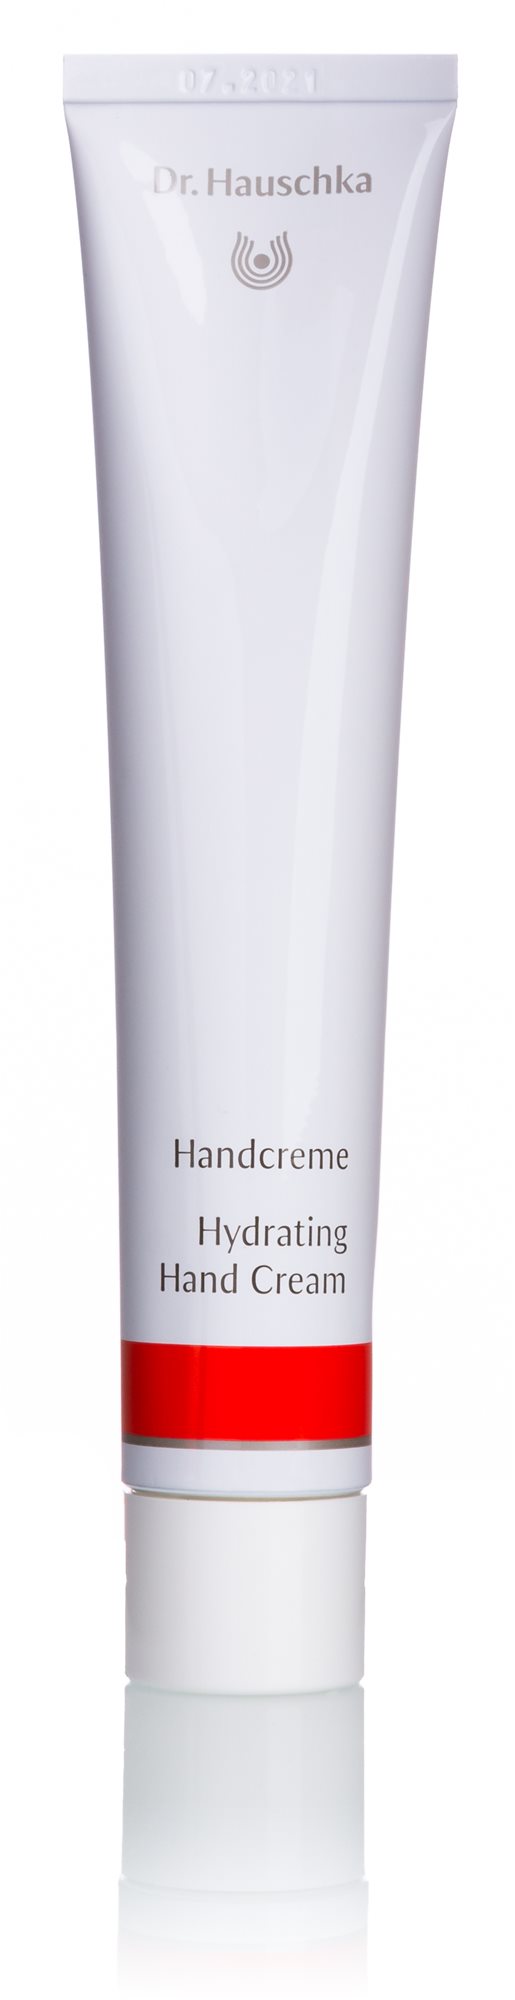 DR. HAUSCHKA Hydrating Hand Cream 50 ml